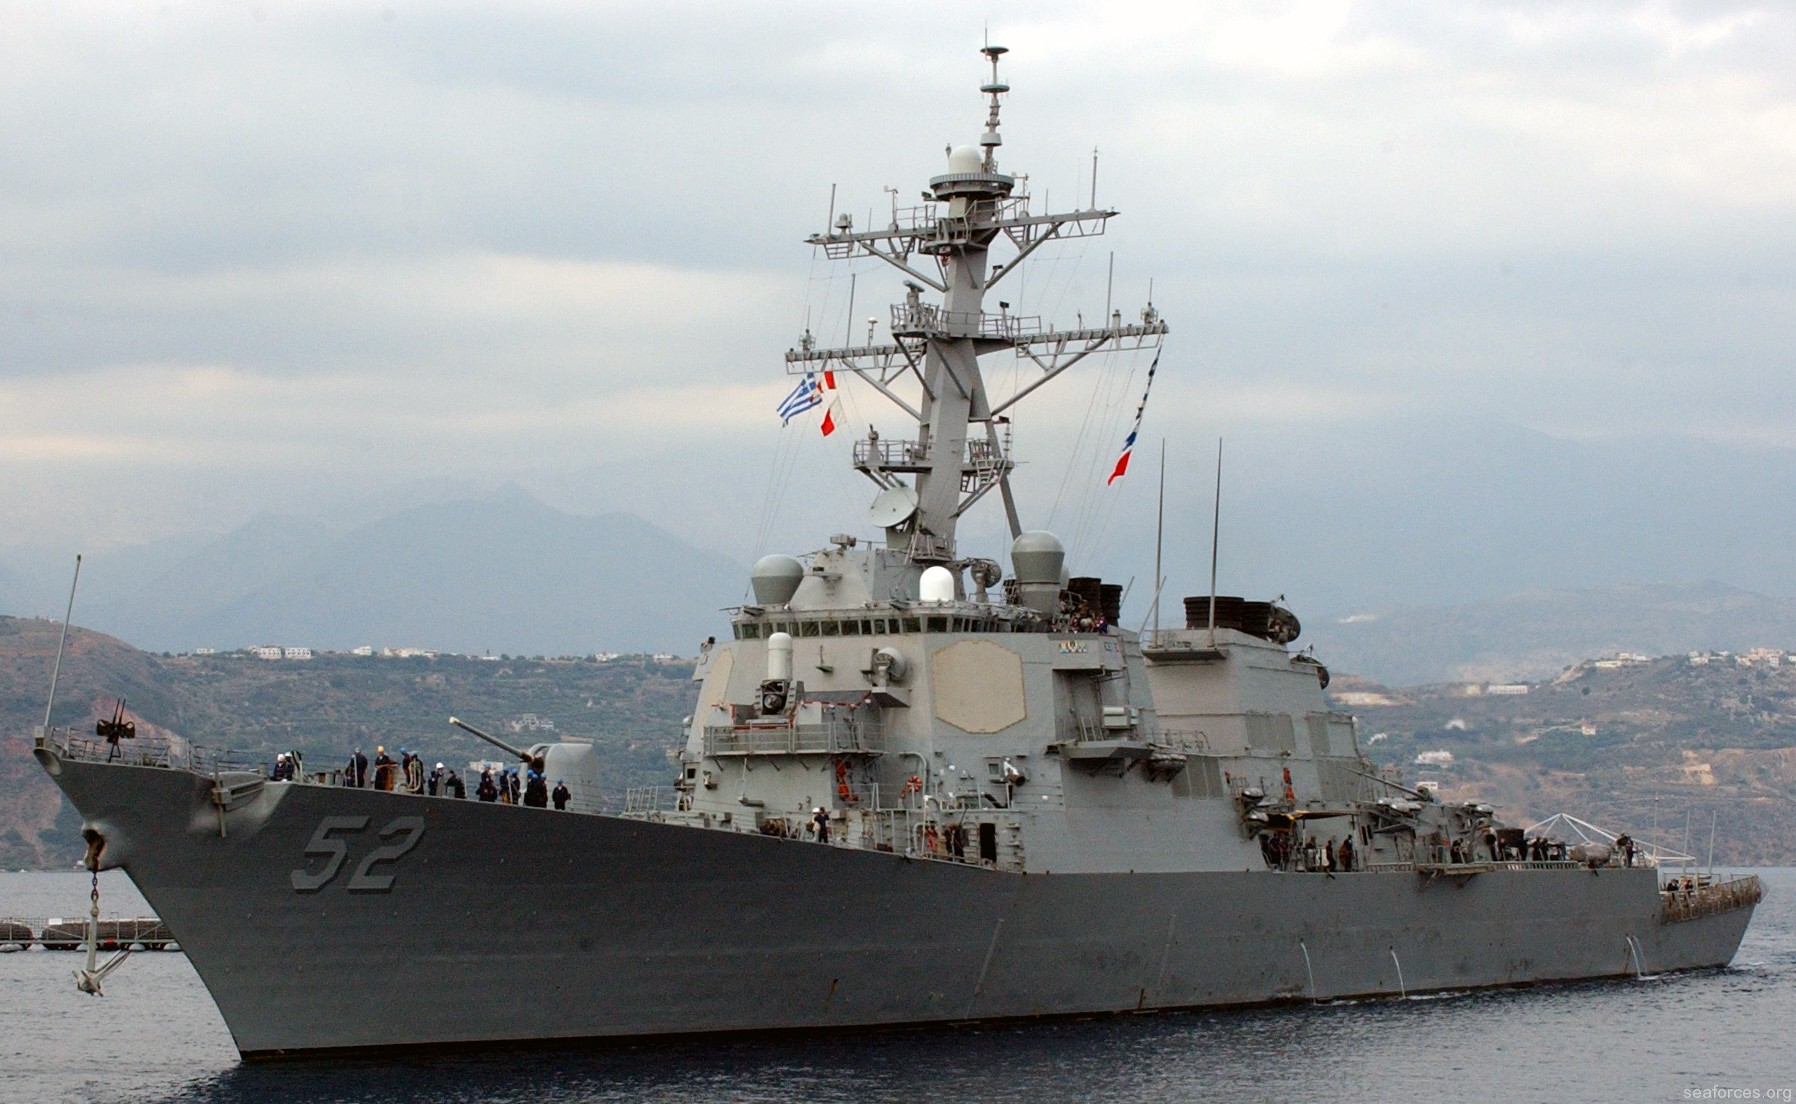 ddg-52 uss barry guided missile destroyer us navy 70 souda bay greece